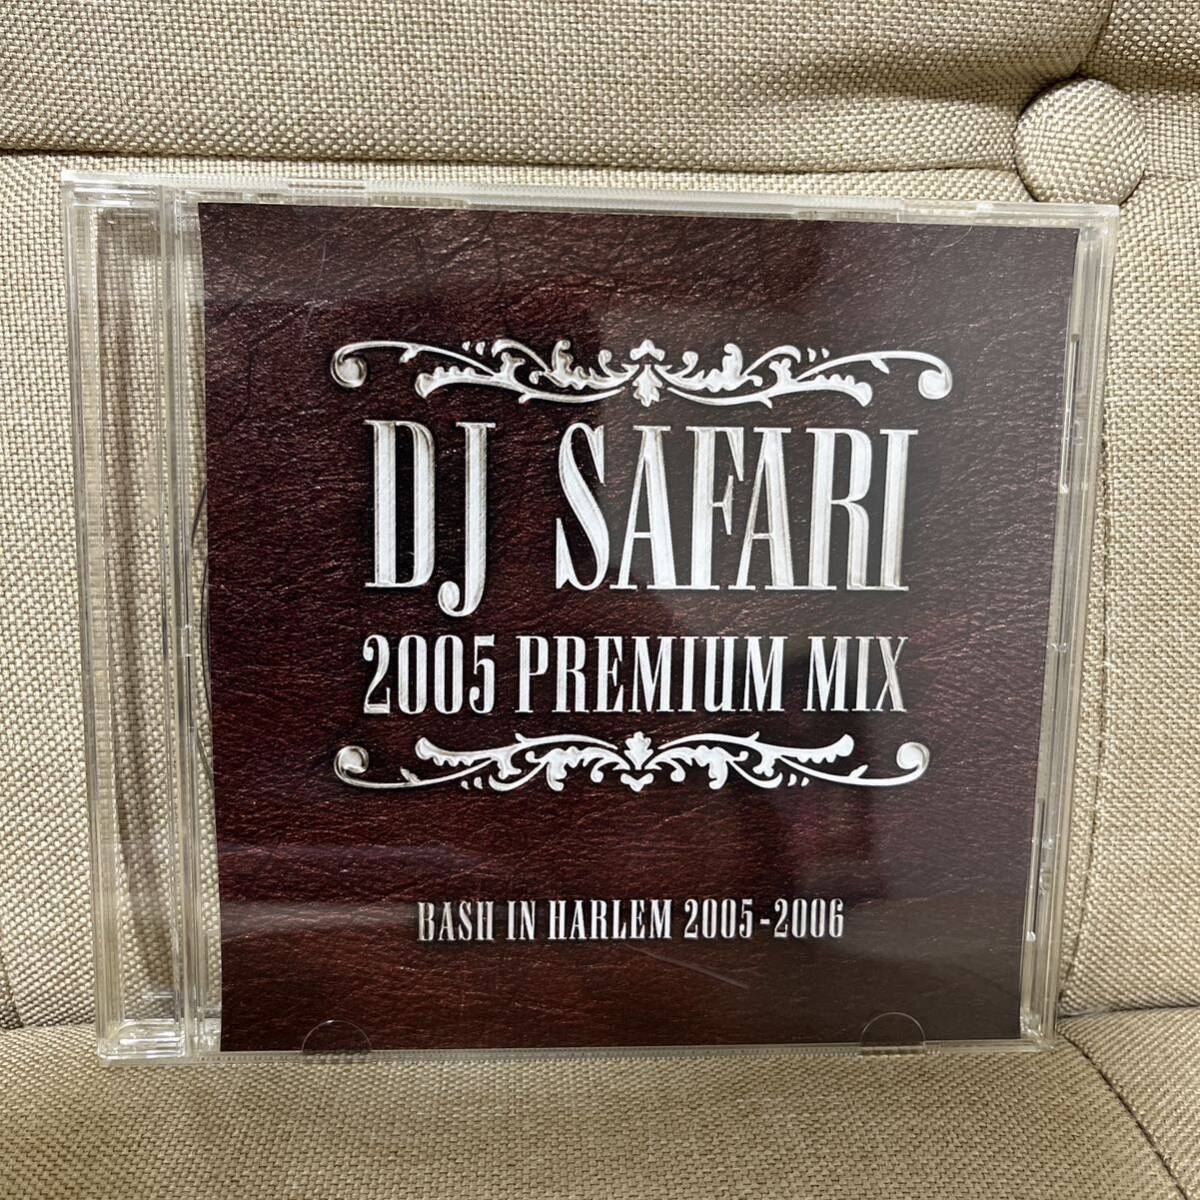 【DJ SAFARI】2005 PREMIUM MIX (BASH IN HARLEM 2005 - 2006)【MIX CD】【HIPHOP / R&B】【廃盤】【送料無料】